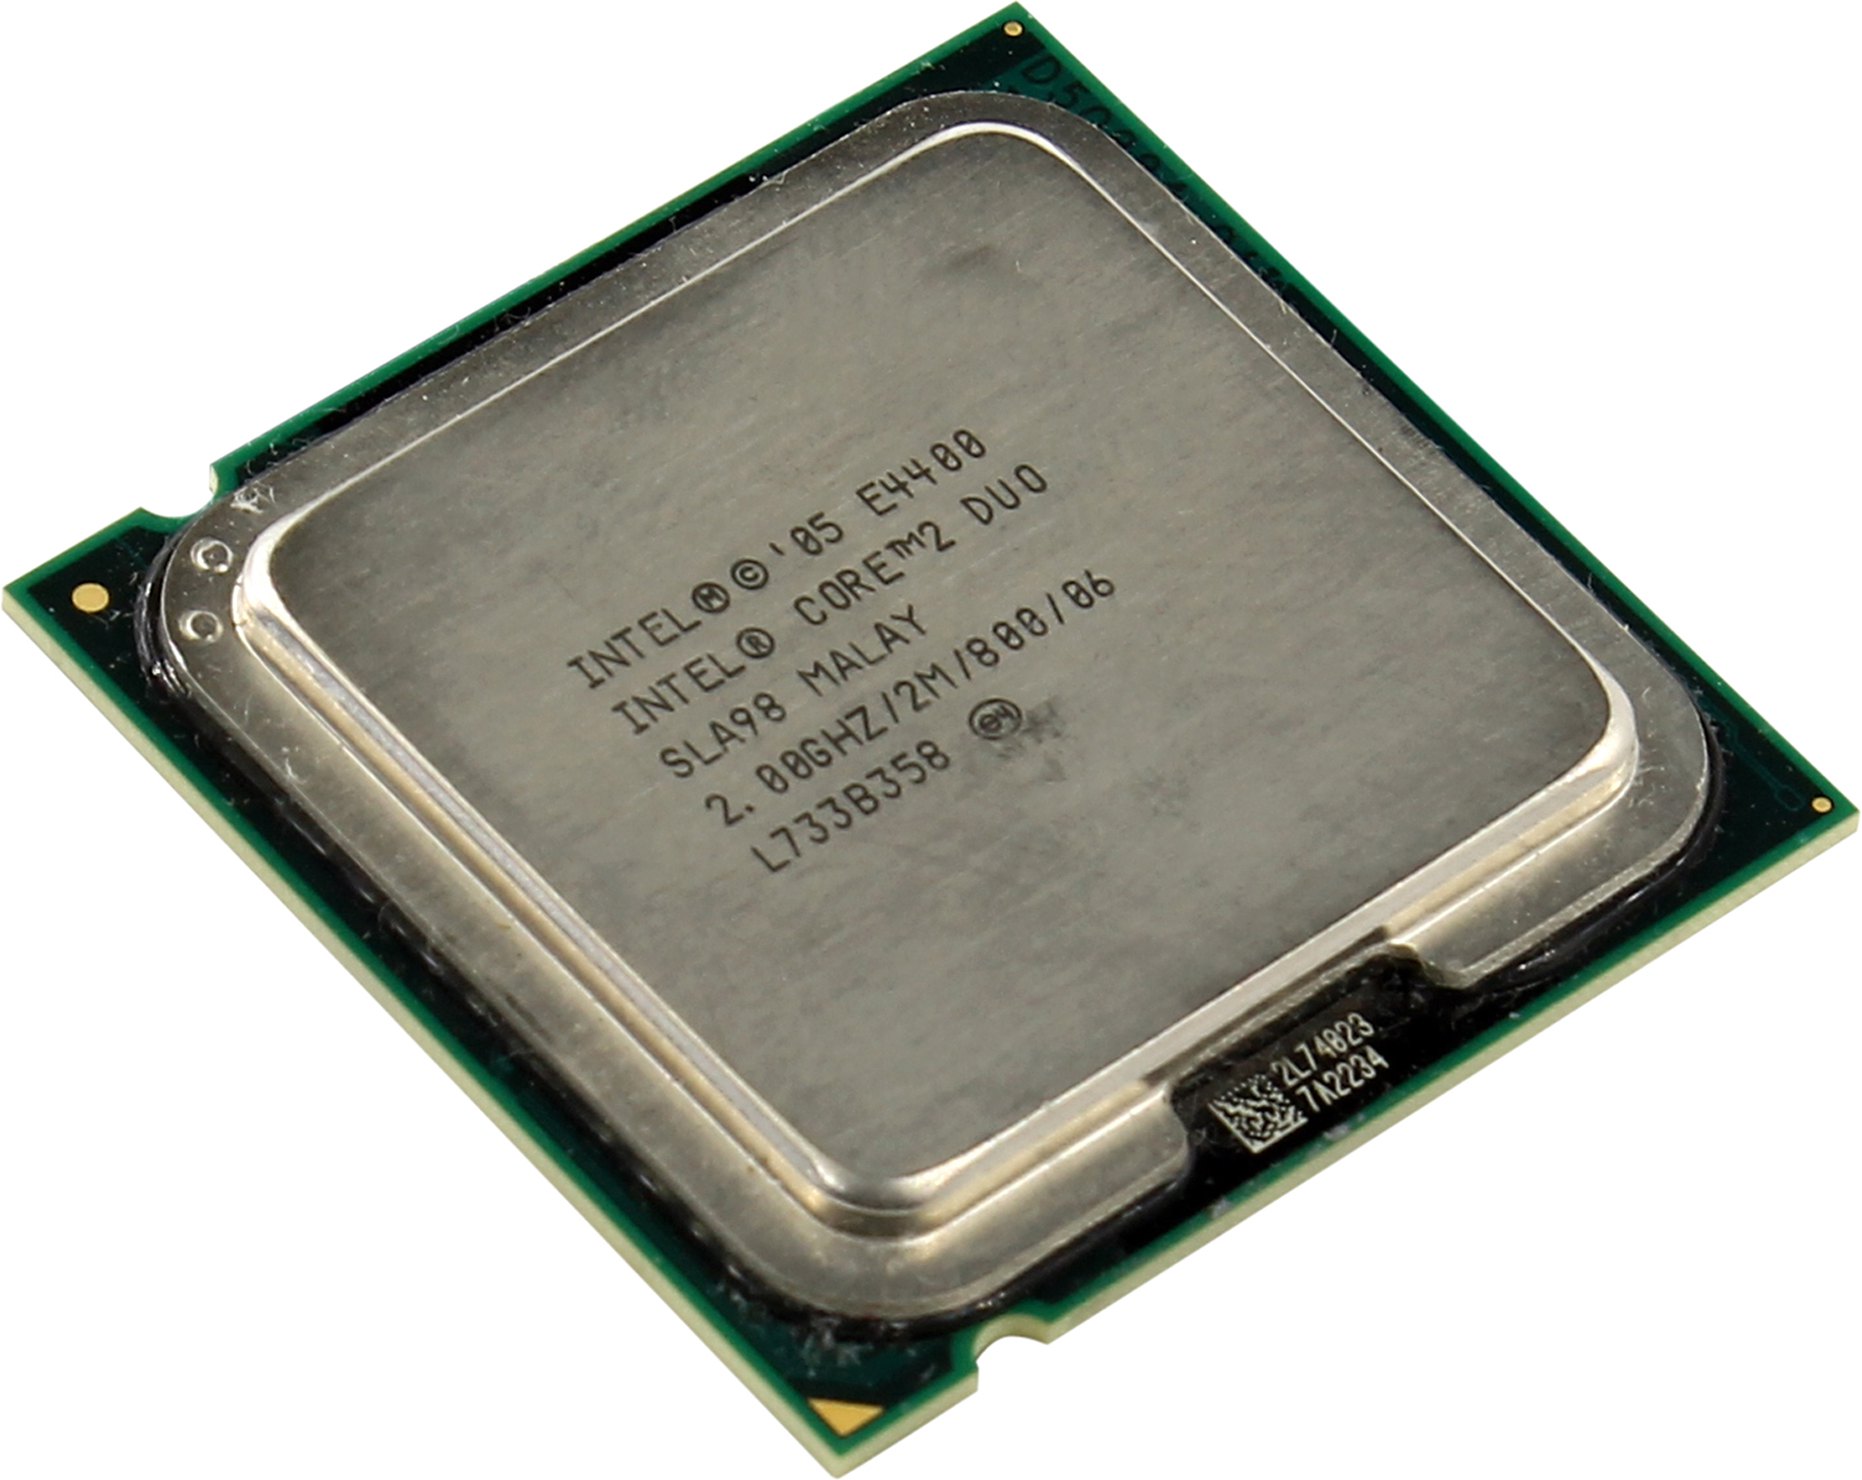 Amd 64 4400. Процессор Intel Core 2 Duo e4400. Intel Core 2 Duo e7300. Intel Core 2 Duo e6320 Conroe lga775, 2 x 1867 МГЦ. Intel Core 2 Duo e4700.